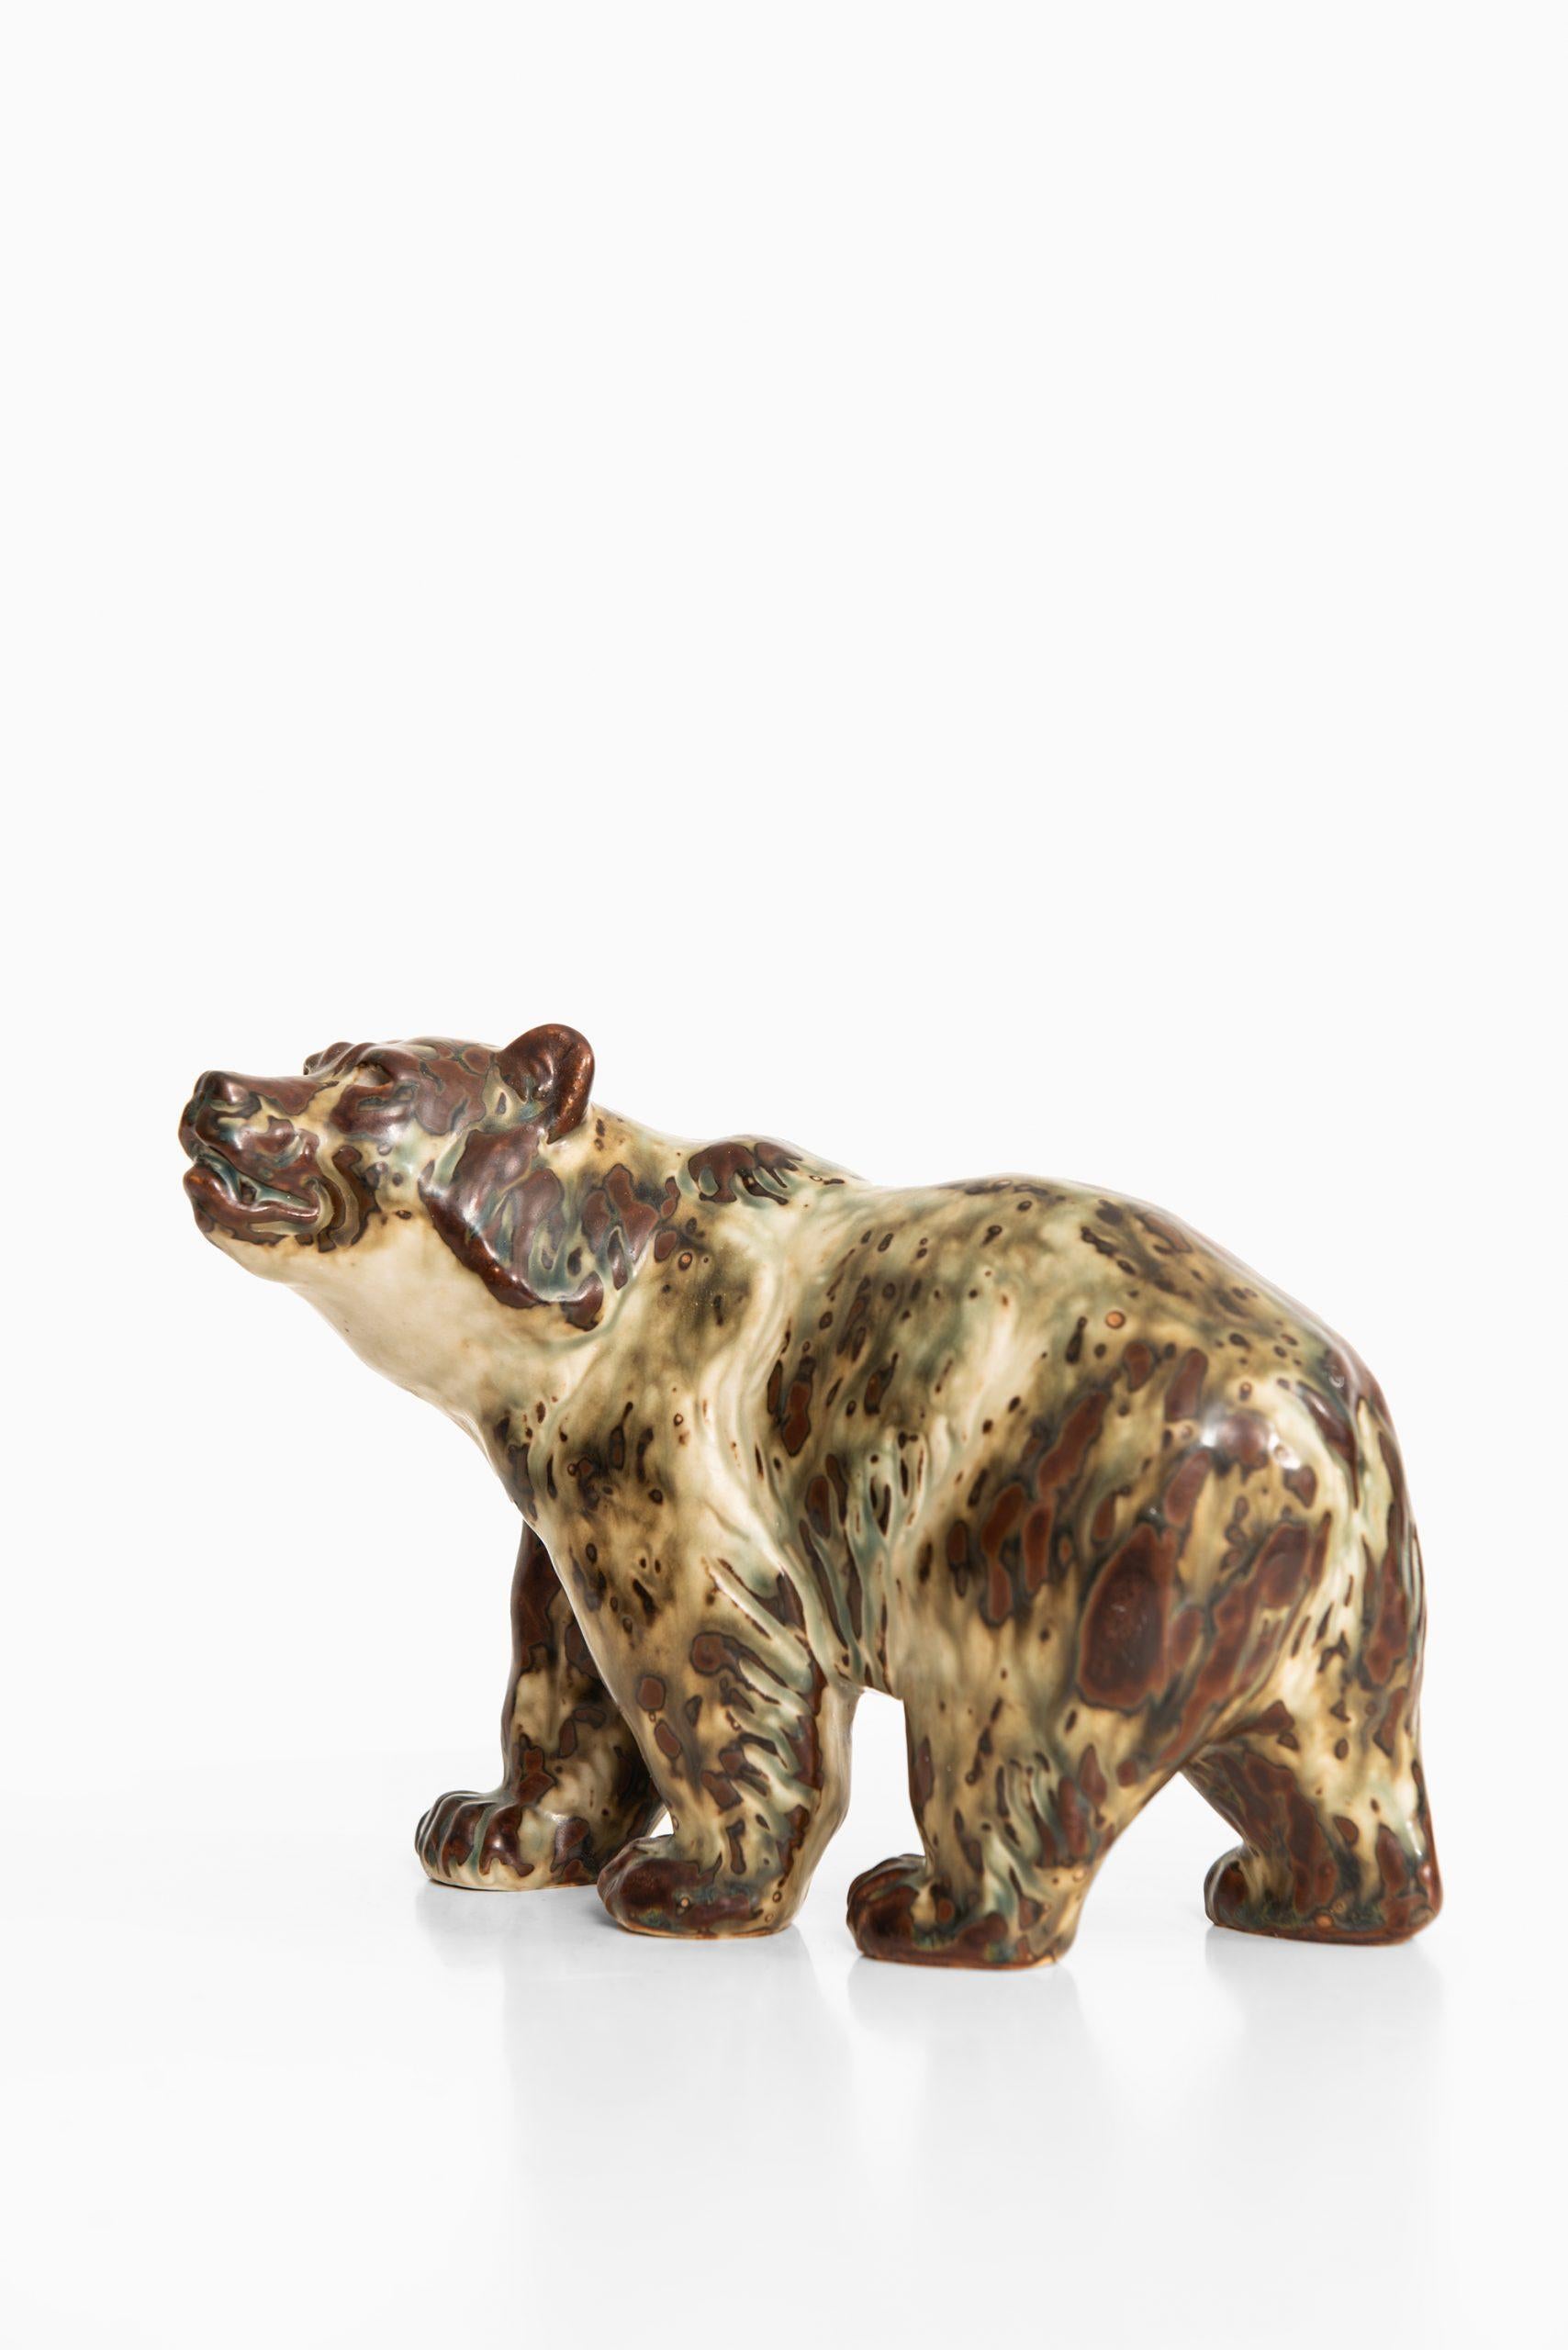 Knud Kyhn Ceramic Bear Nr 20155 Produced by Royal Copenhagen in Denmark In Good Condition For Sale In Limhamn, Skåne län